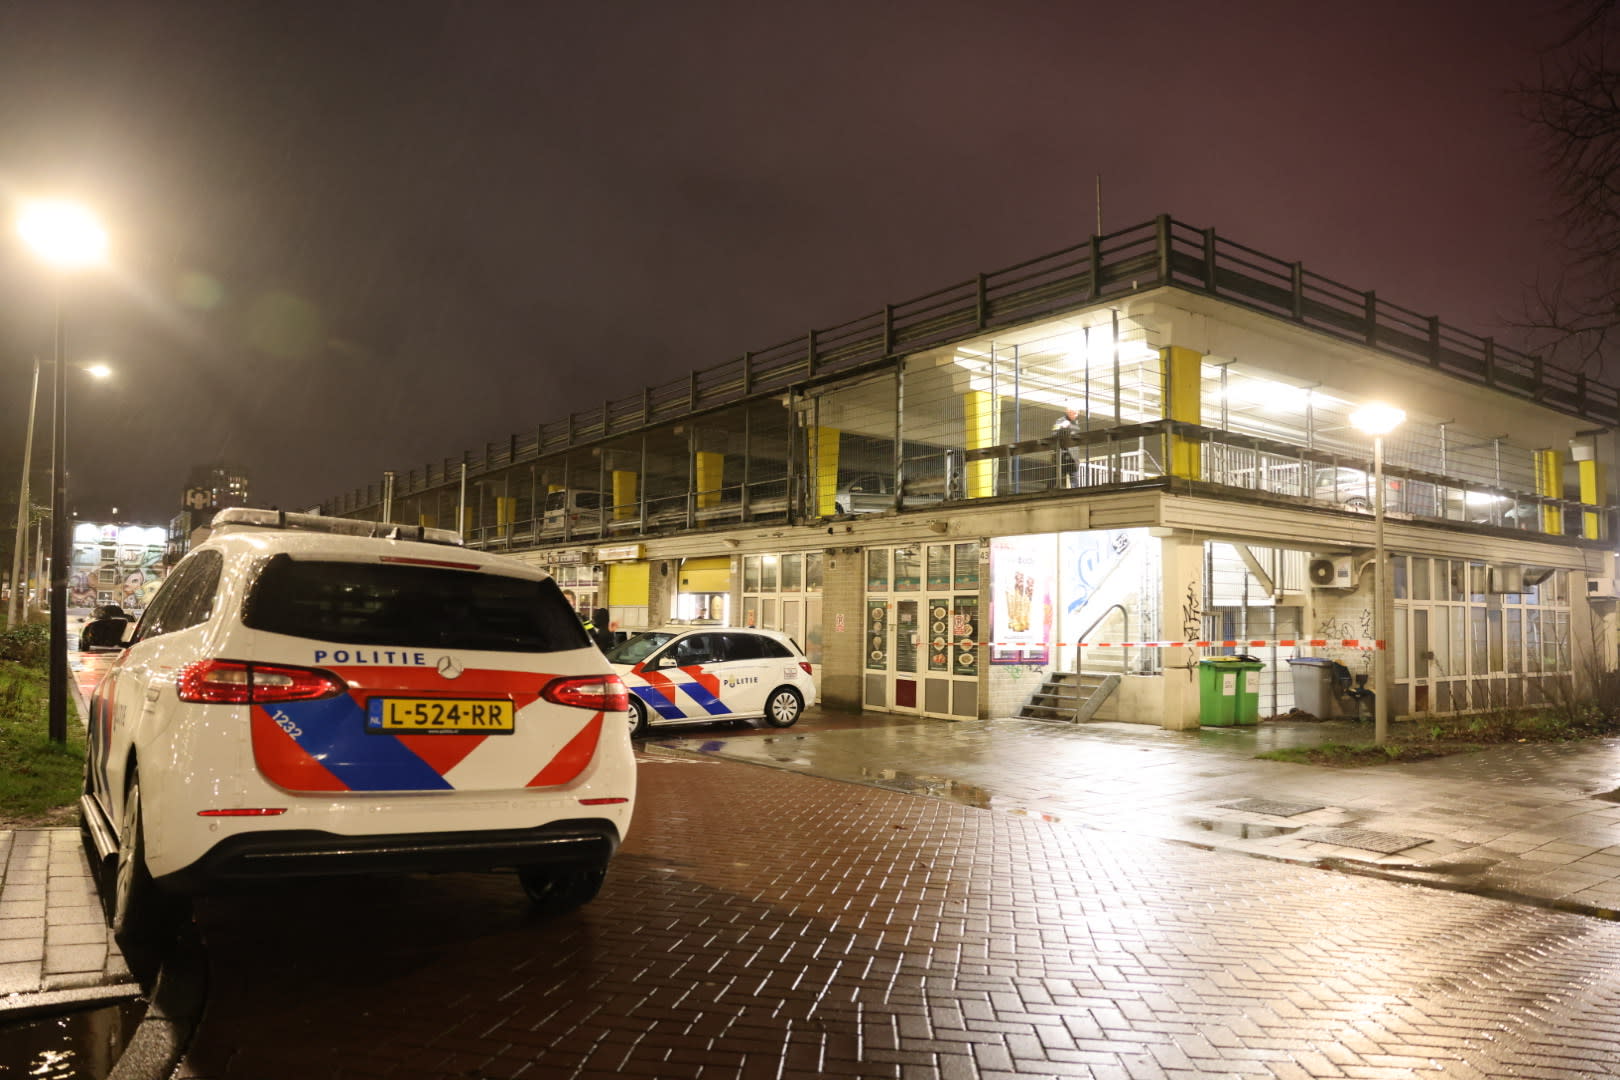 Twintiger gewond bij schietpartij in parkeergarage Amsterdam, verdachte aangehouden